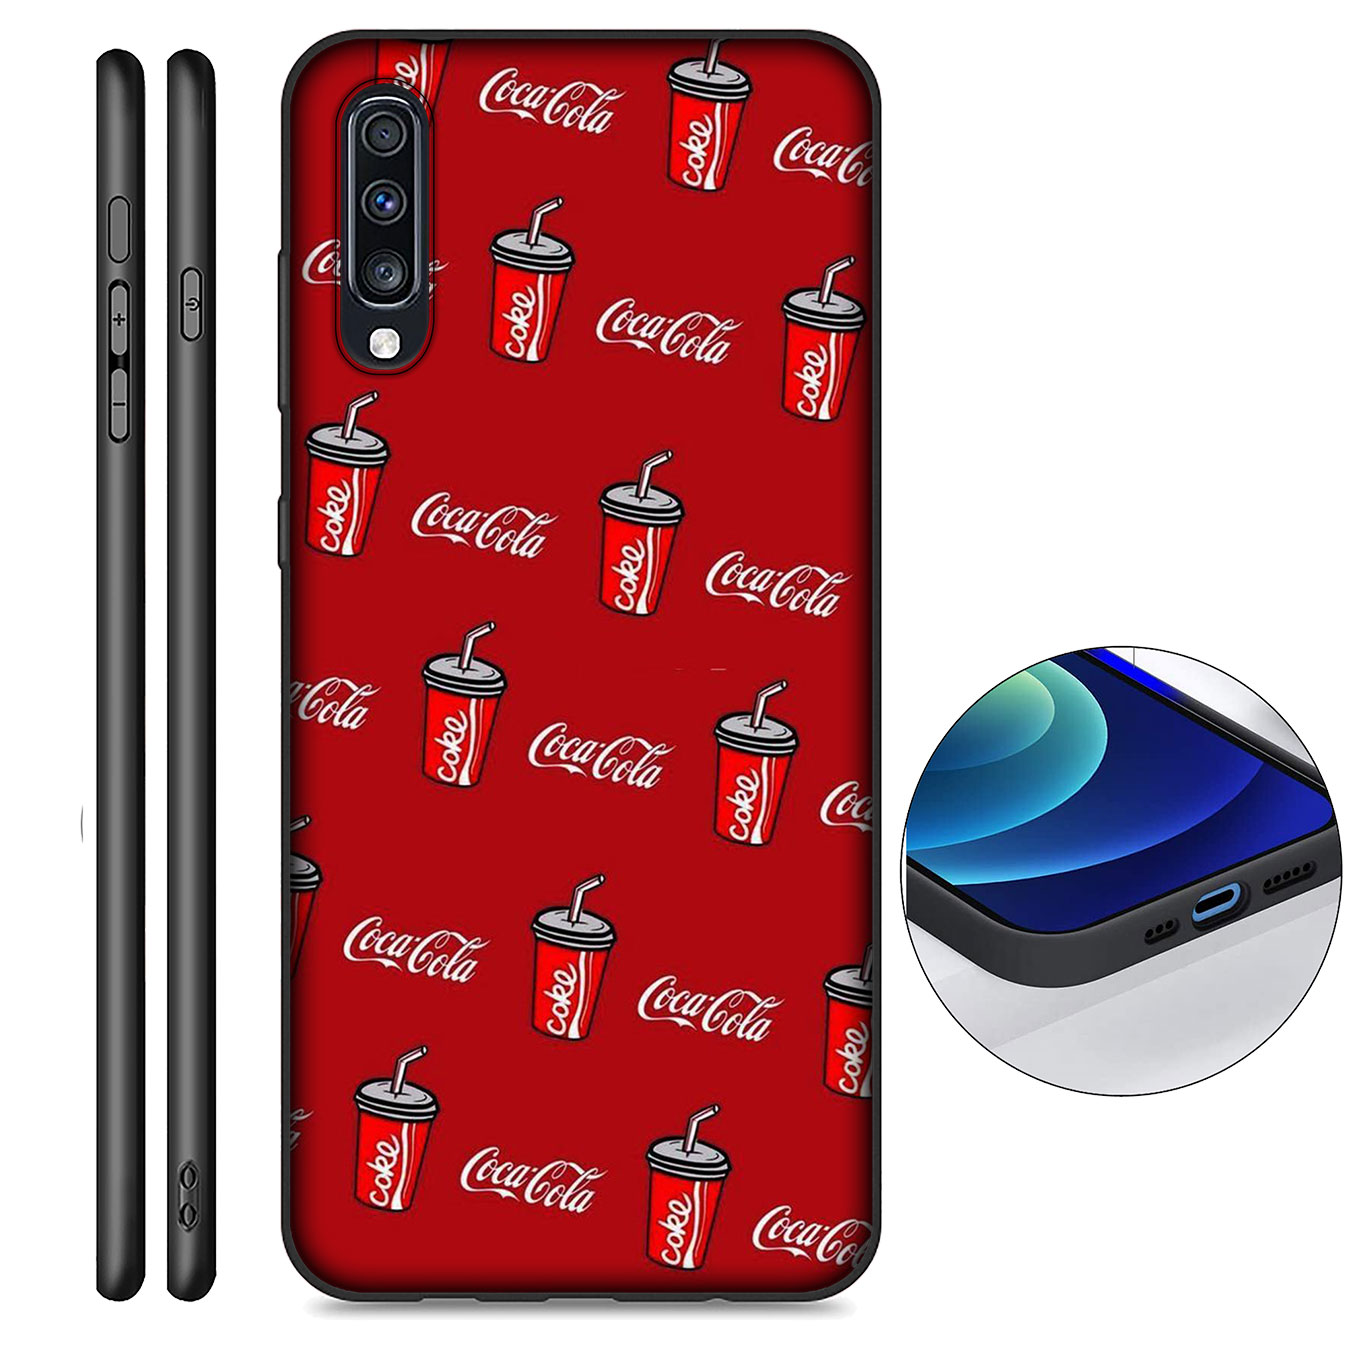 Samsung Galaxy Note 20 Ultra Note 10 Plus  Lite 8 9 S7 Edge M11 Phone Case Soft Silicone Casing B102 Coca Cola Coke S